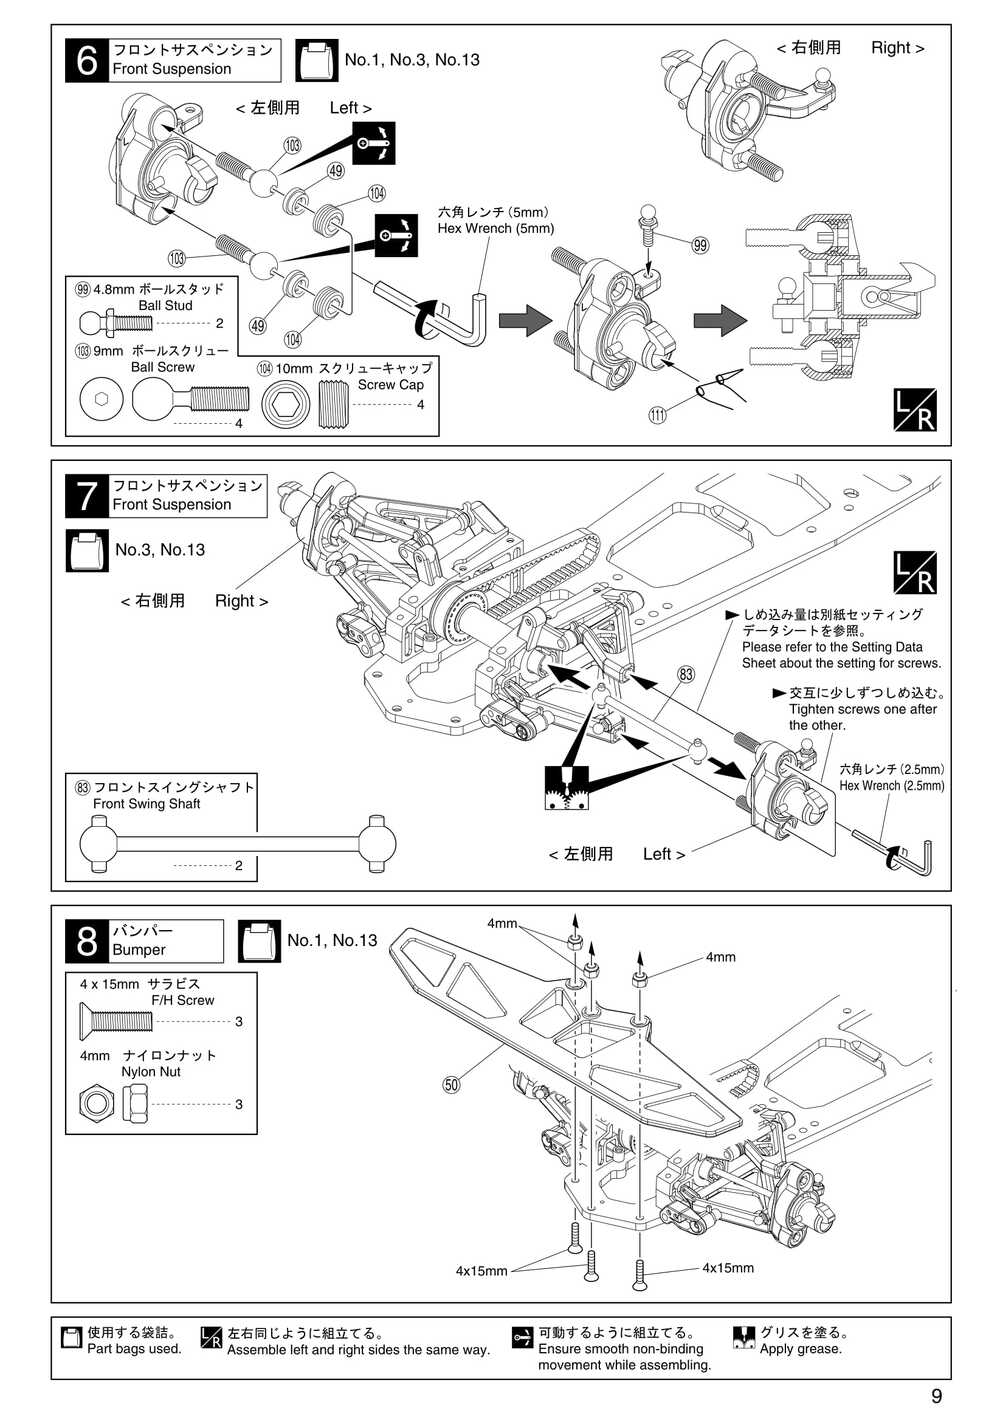 Kyosho - 31041 - Fantom Sports - Manual - Page 09